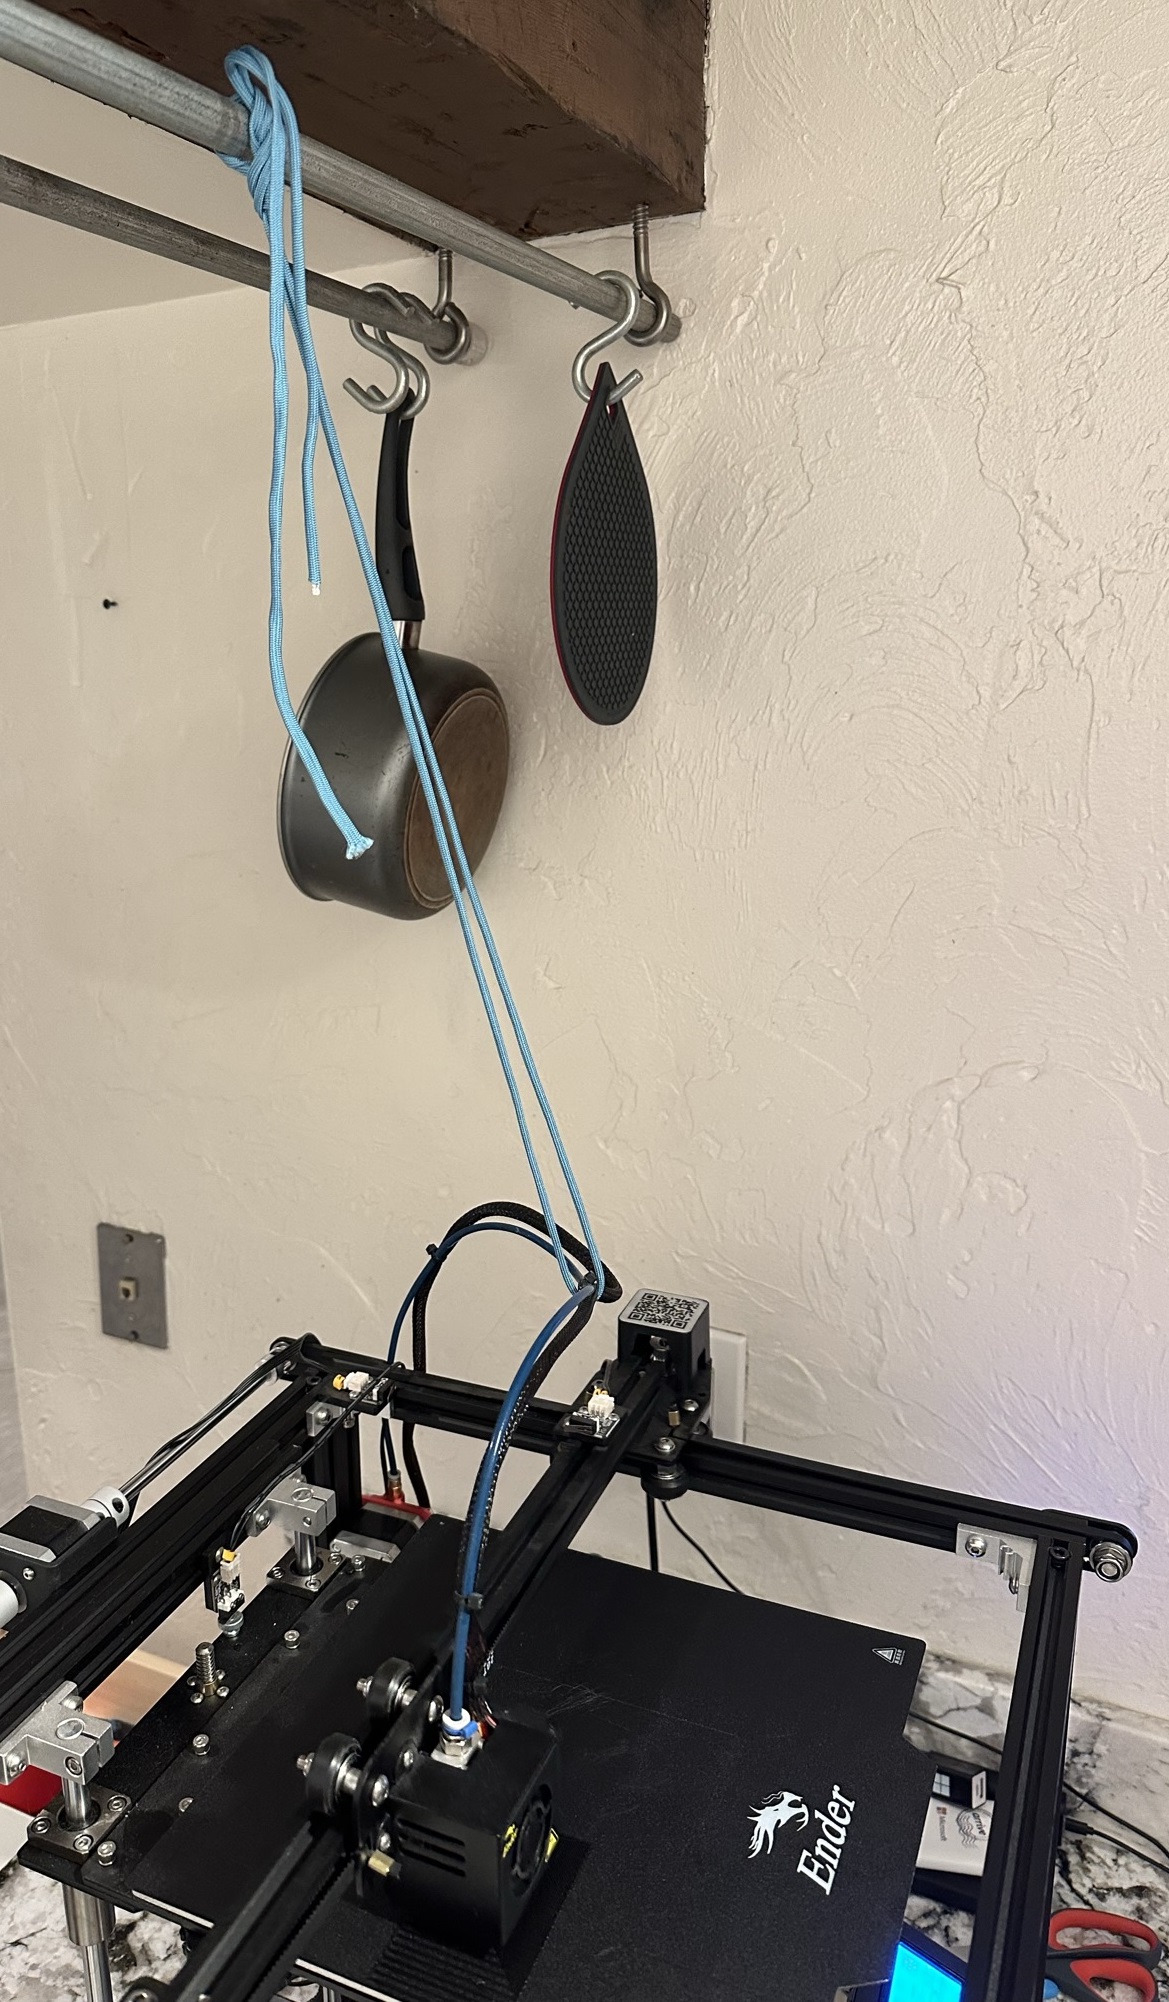 3D printer hose being suspended